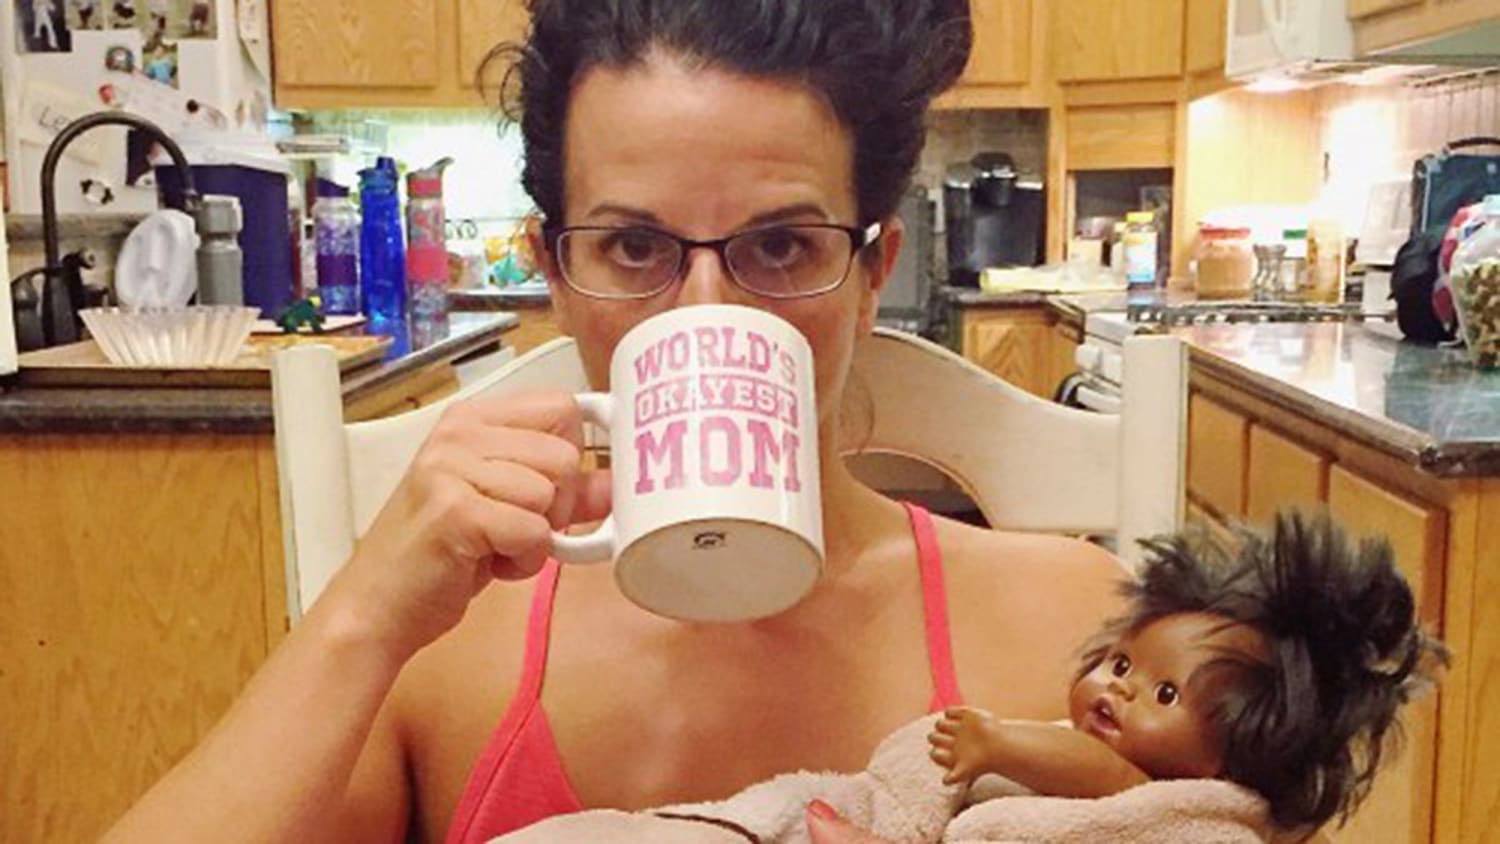 Bad Moms stars reveal their real-life motherhood struggles